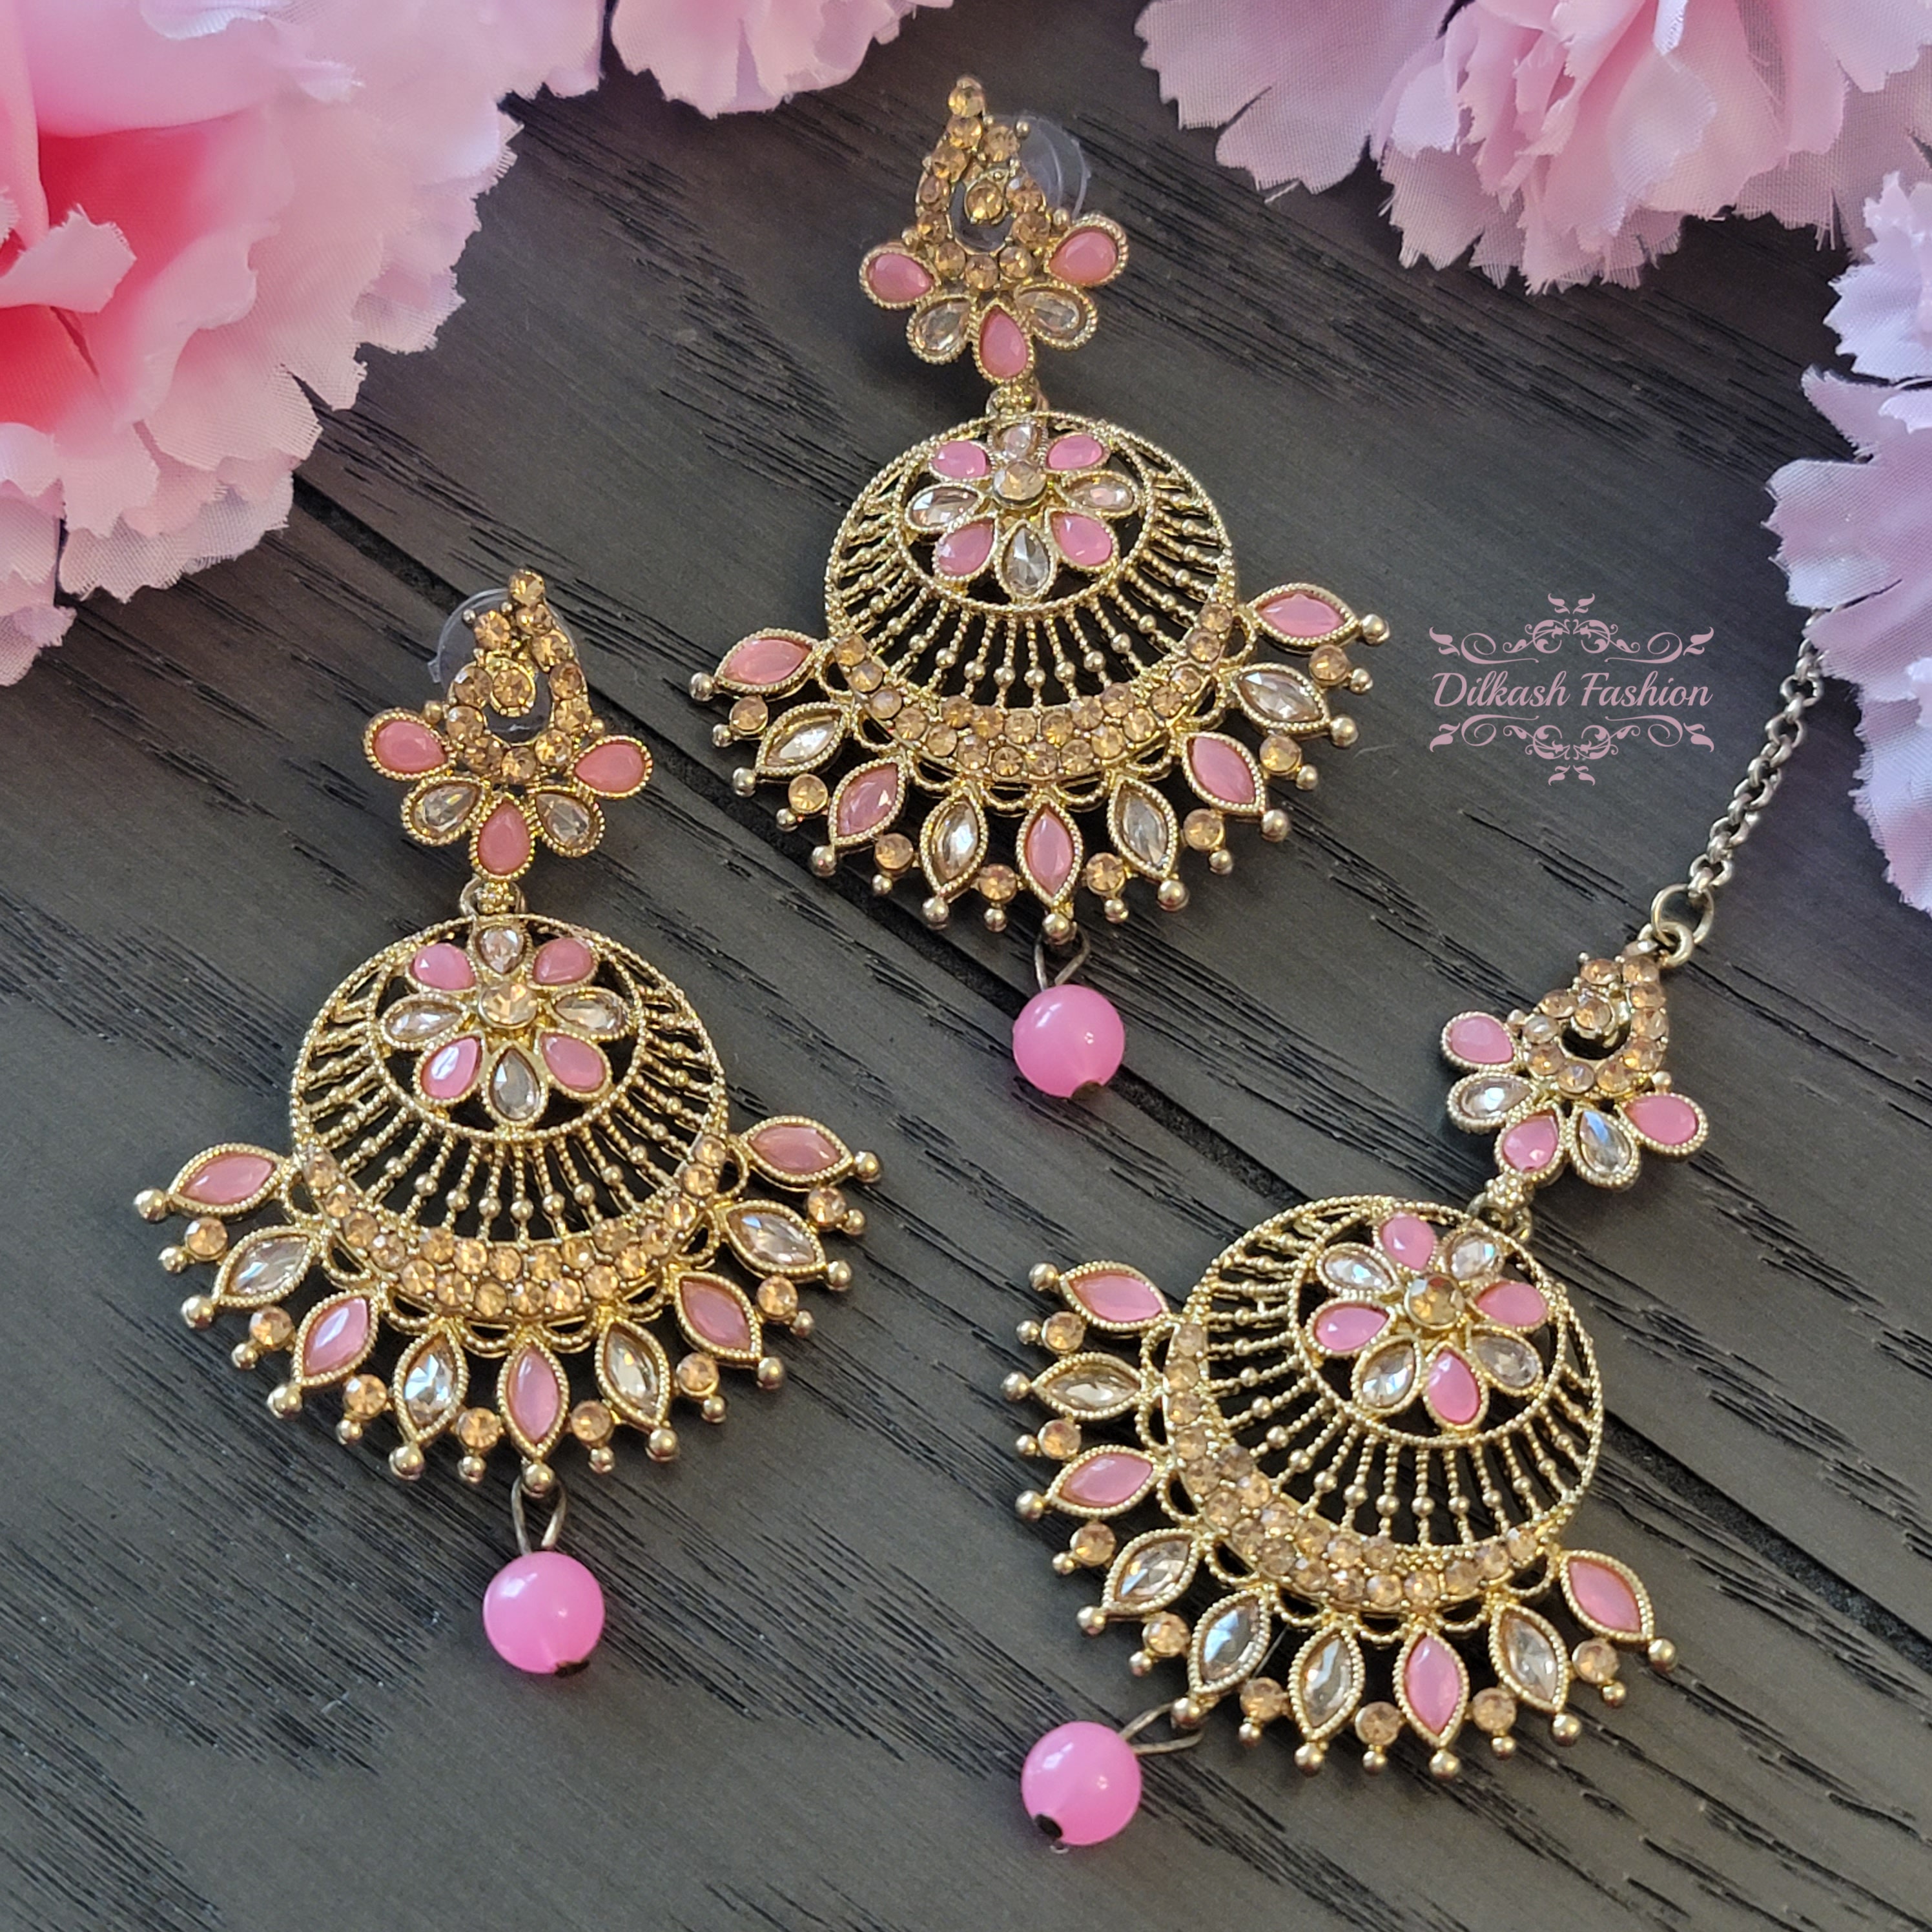 Pakistani Indian Punjabi Gold Baby Pink Polki Earrings Tikka Set Dilkash Fashion Jewelry FREE SHIP Bollywood Chandbali Kundan Jhumki Jhumka